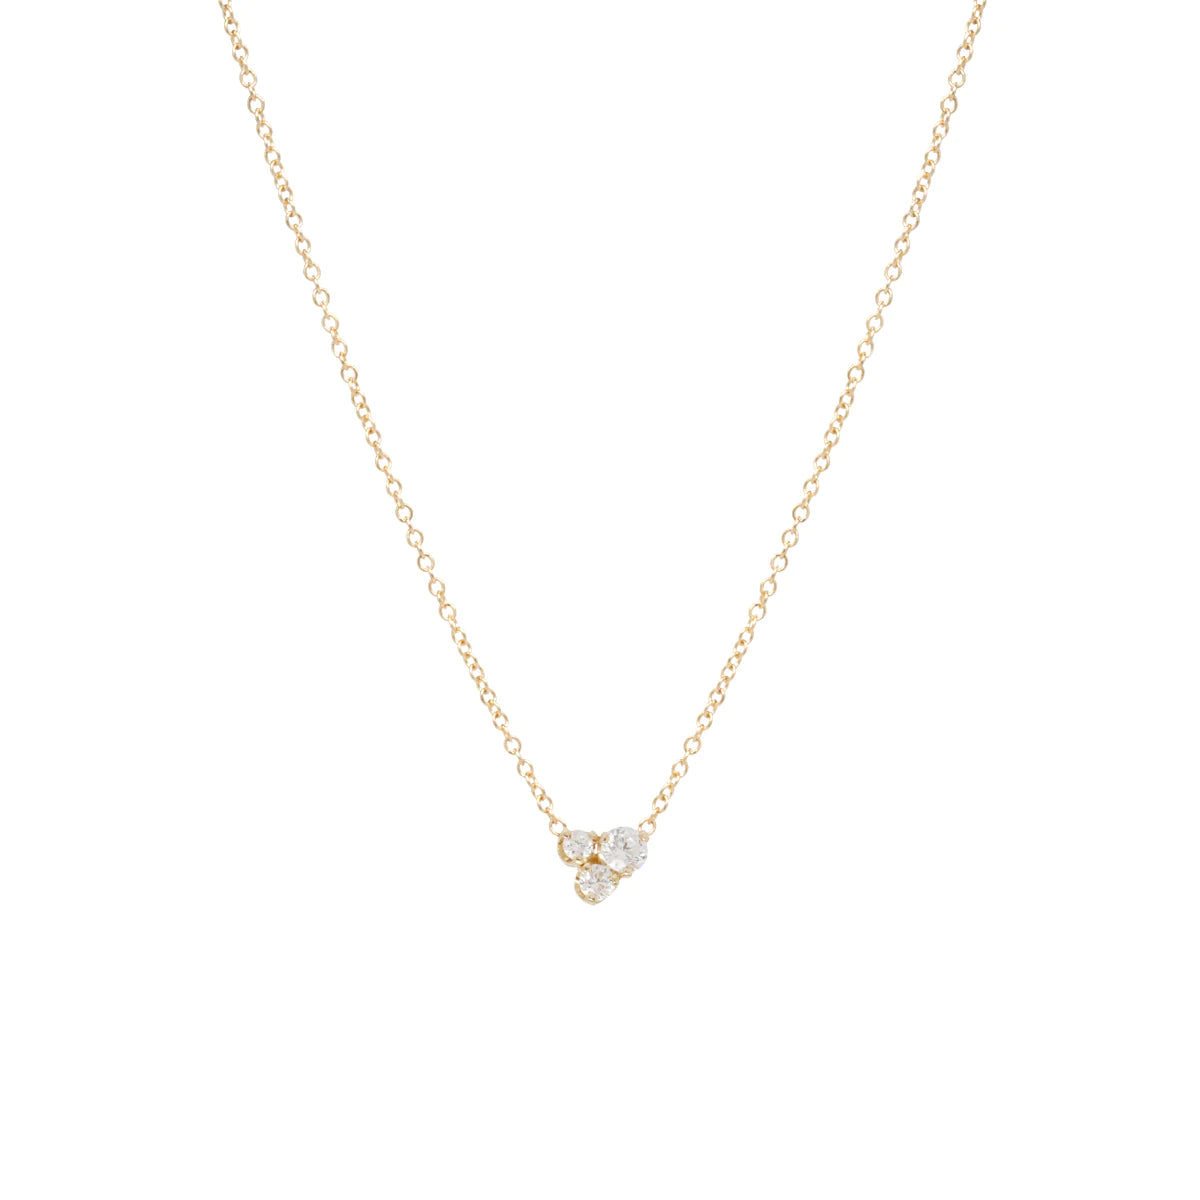 Large 3 Mixed Prong Diamond Necklace